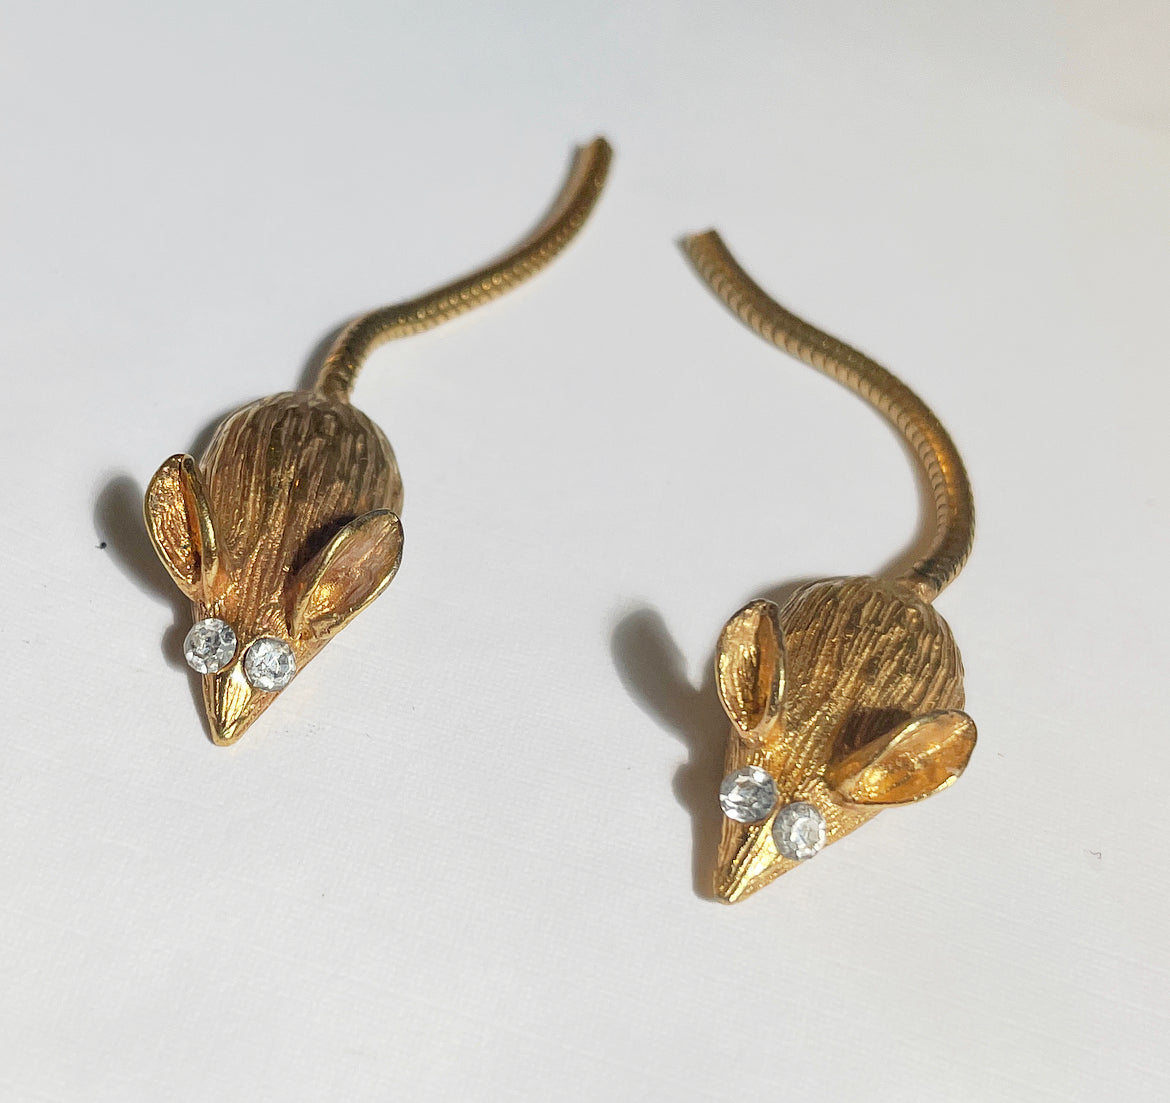 Vintage mouse earrings